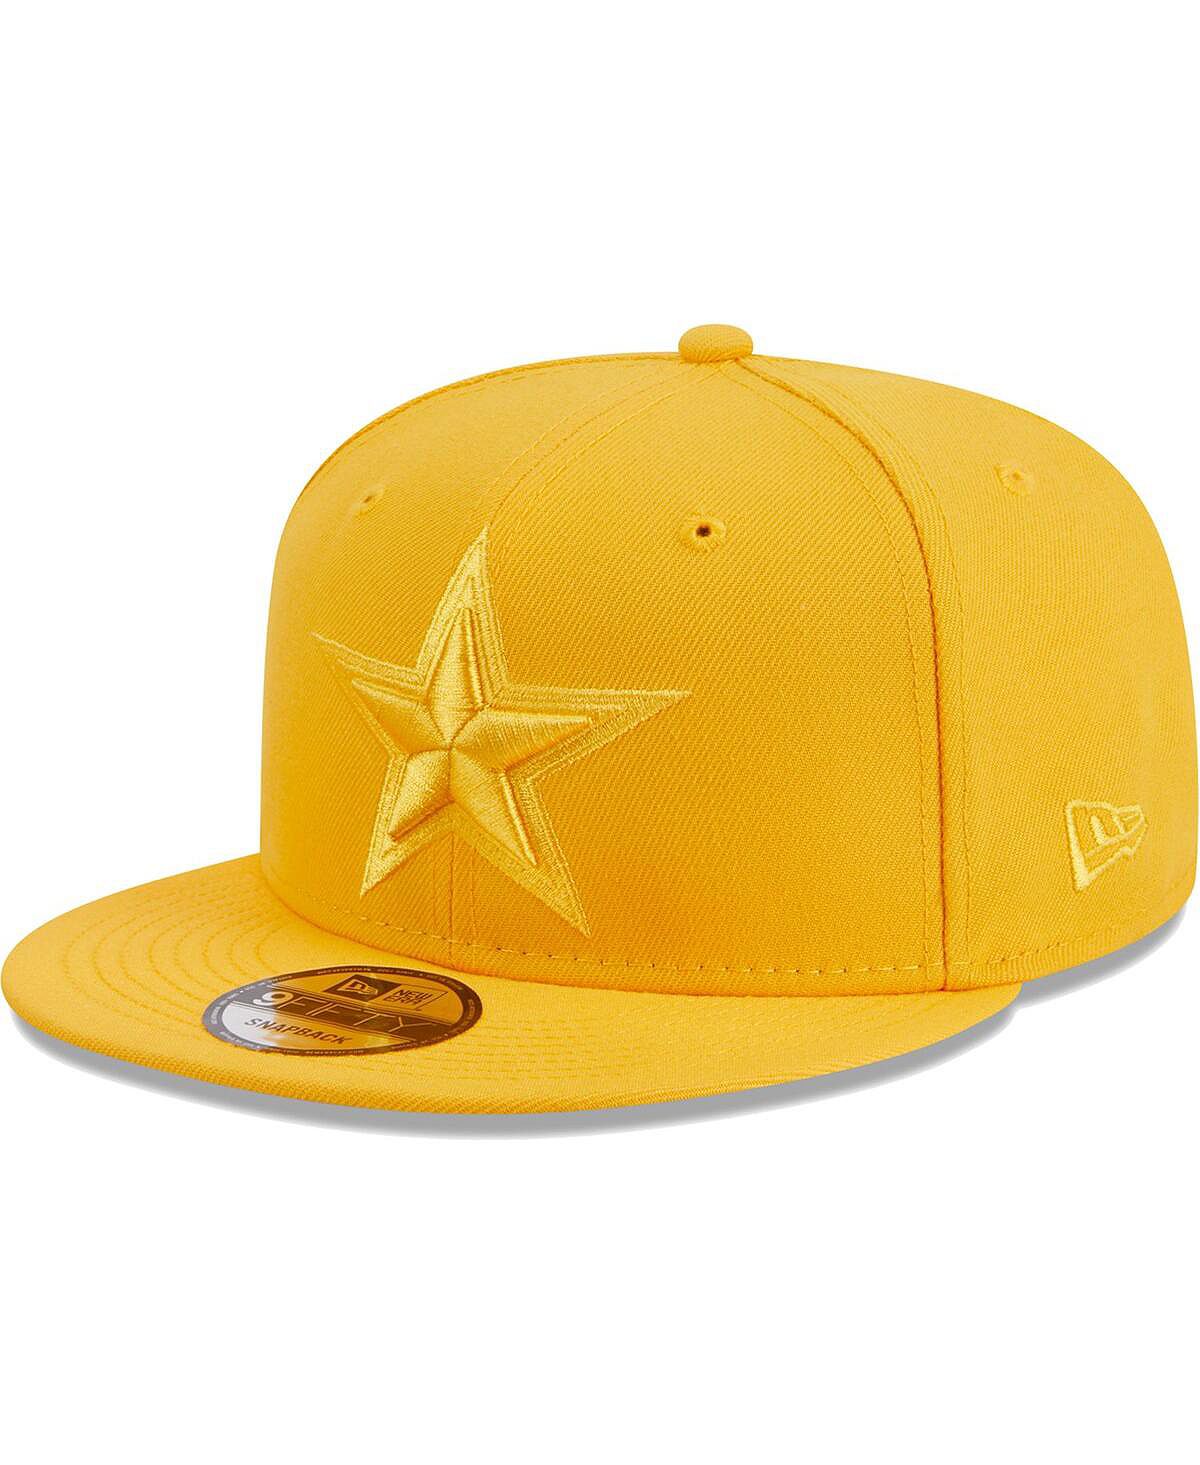 Мужская кепка Snapback Dallas Cowboys цвета золотистого цвета 9FIFTY Snapback New Era